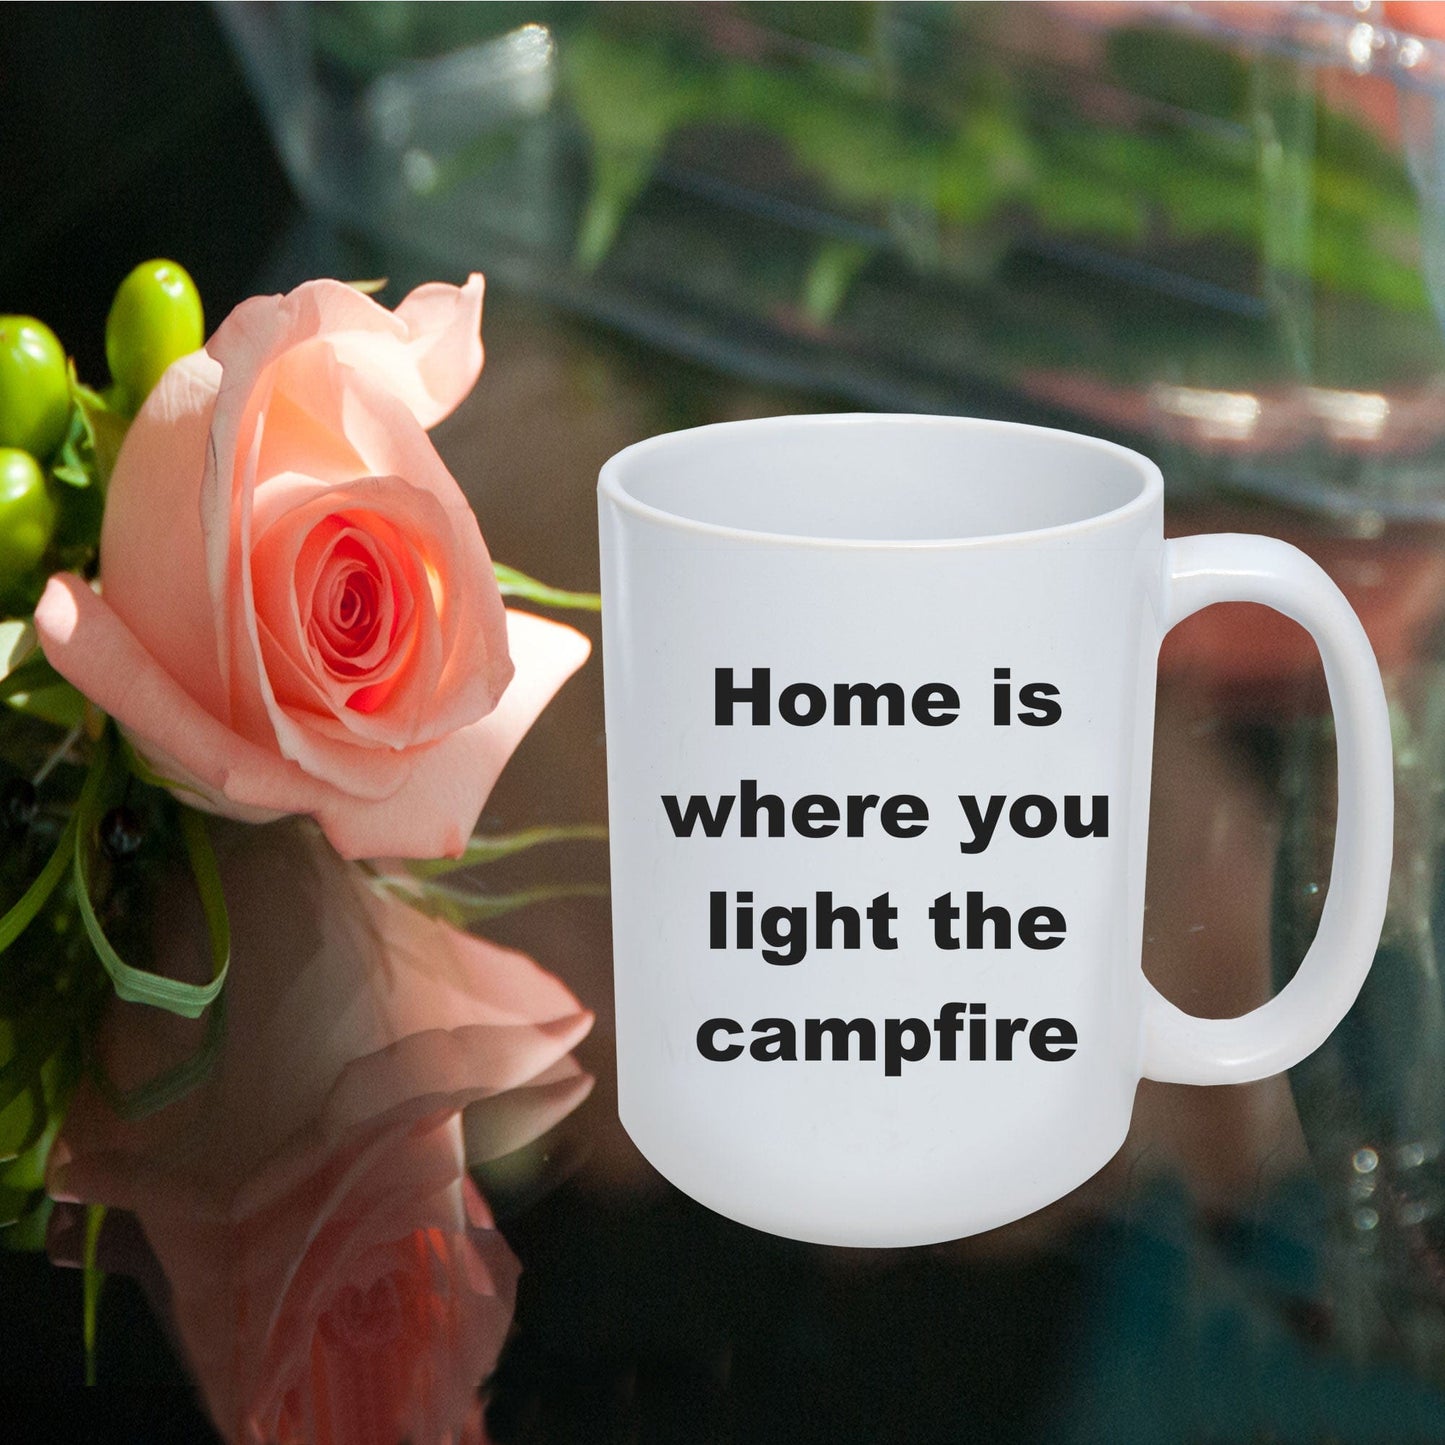 Camping Mug - Home is where you light the campfire